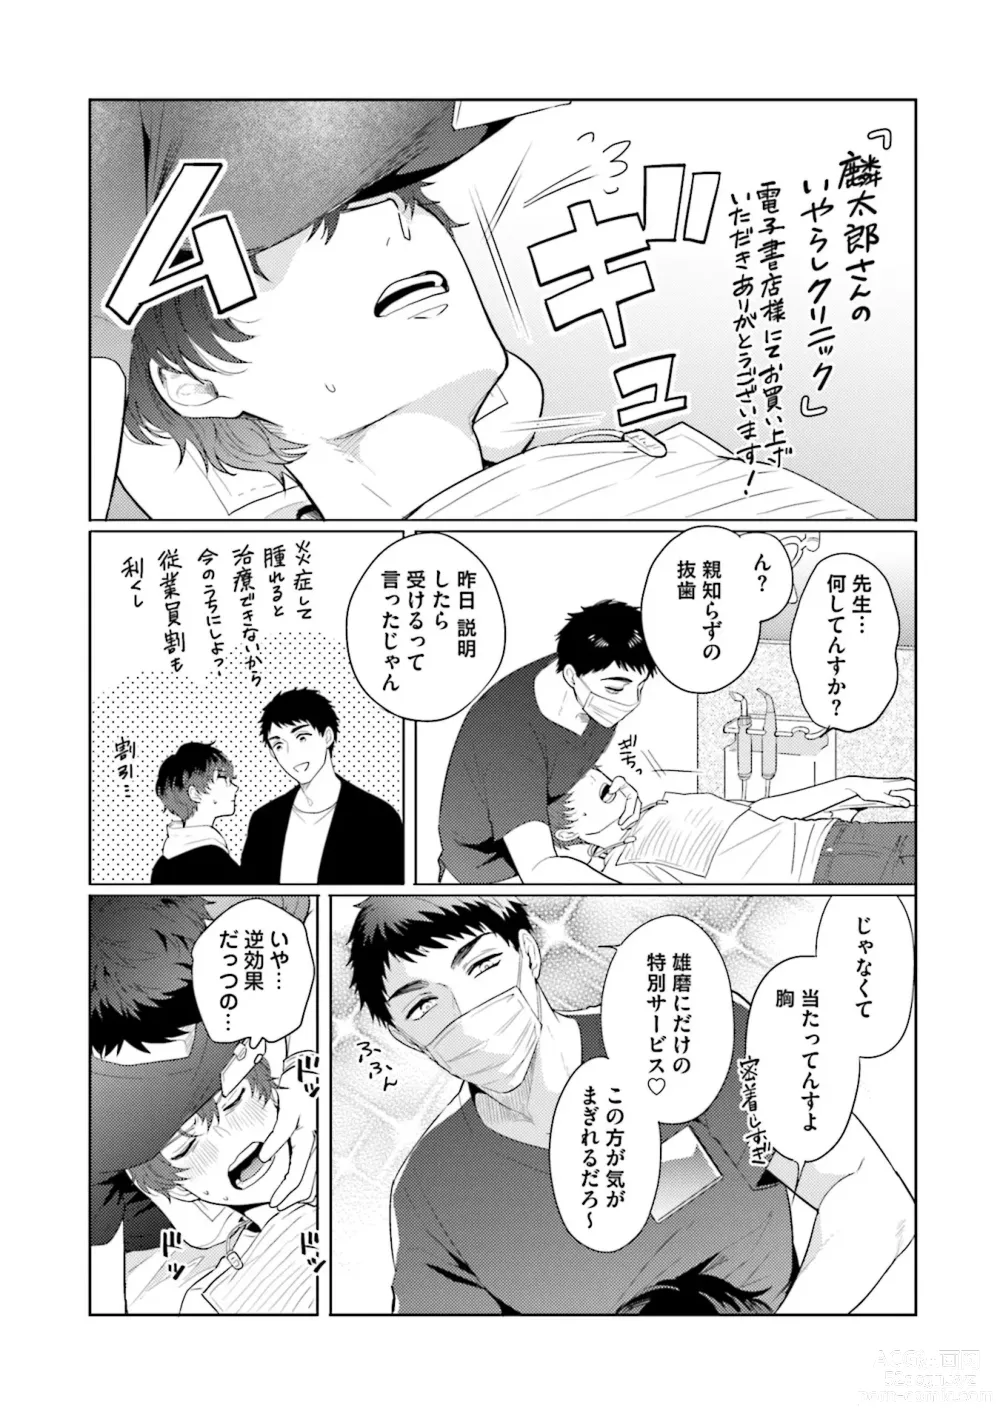 Page 181 of manga Rintarou-san no Iyarashi Clinic